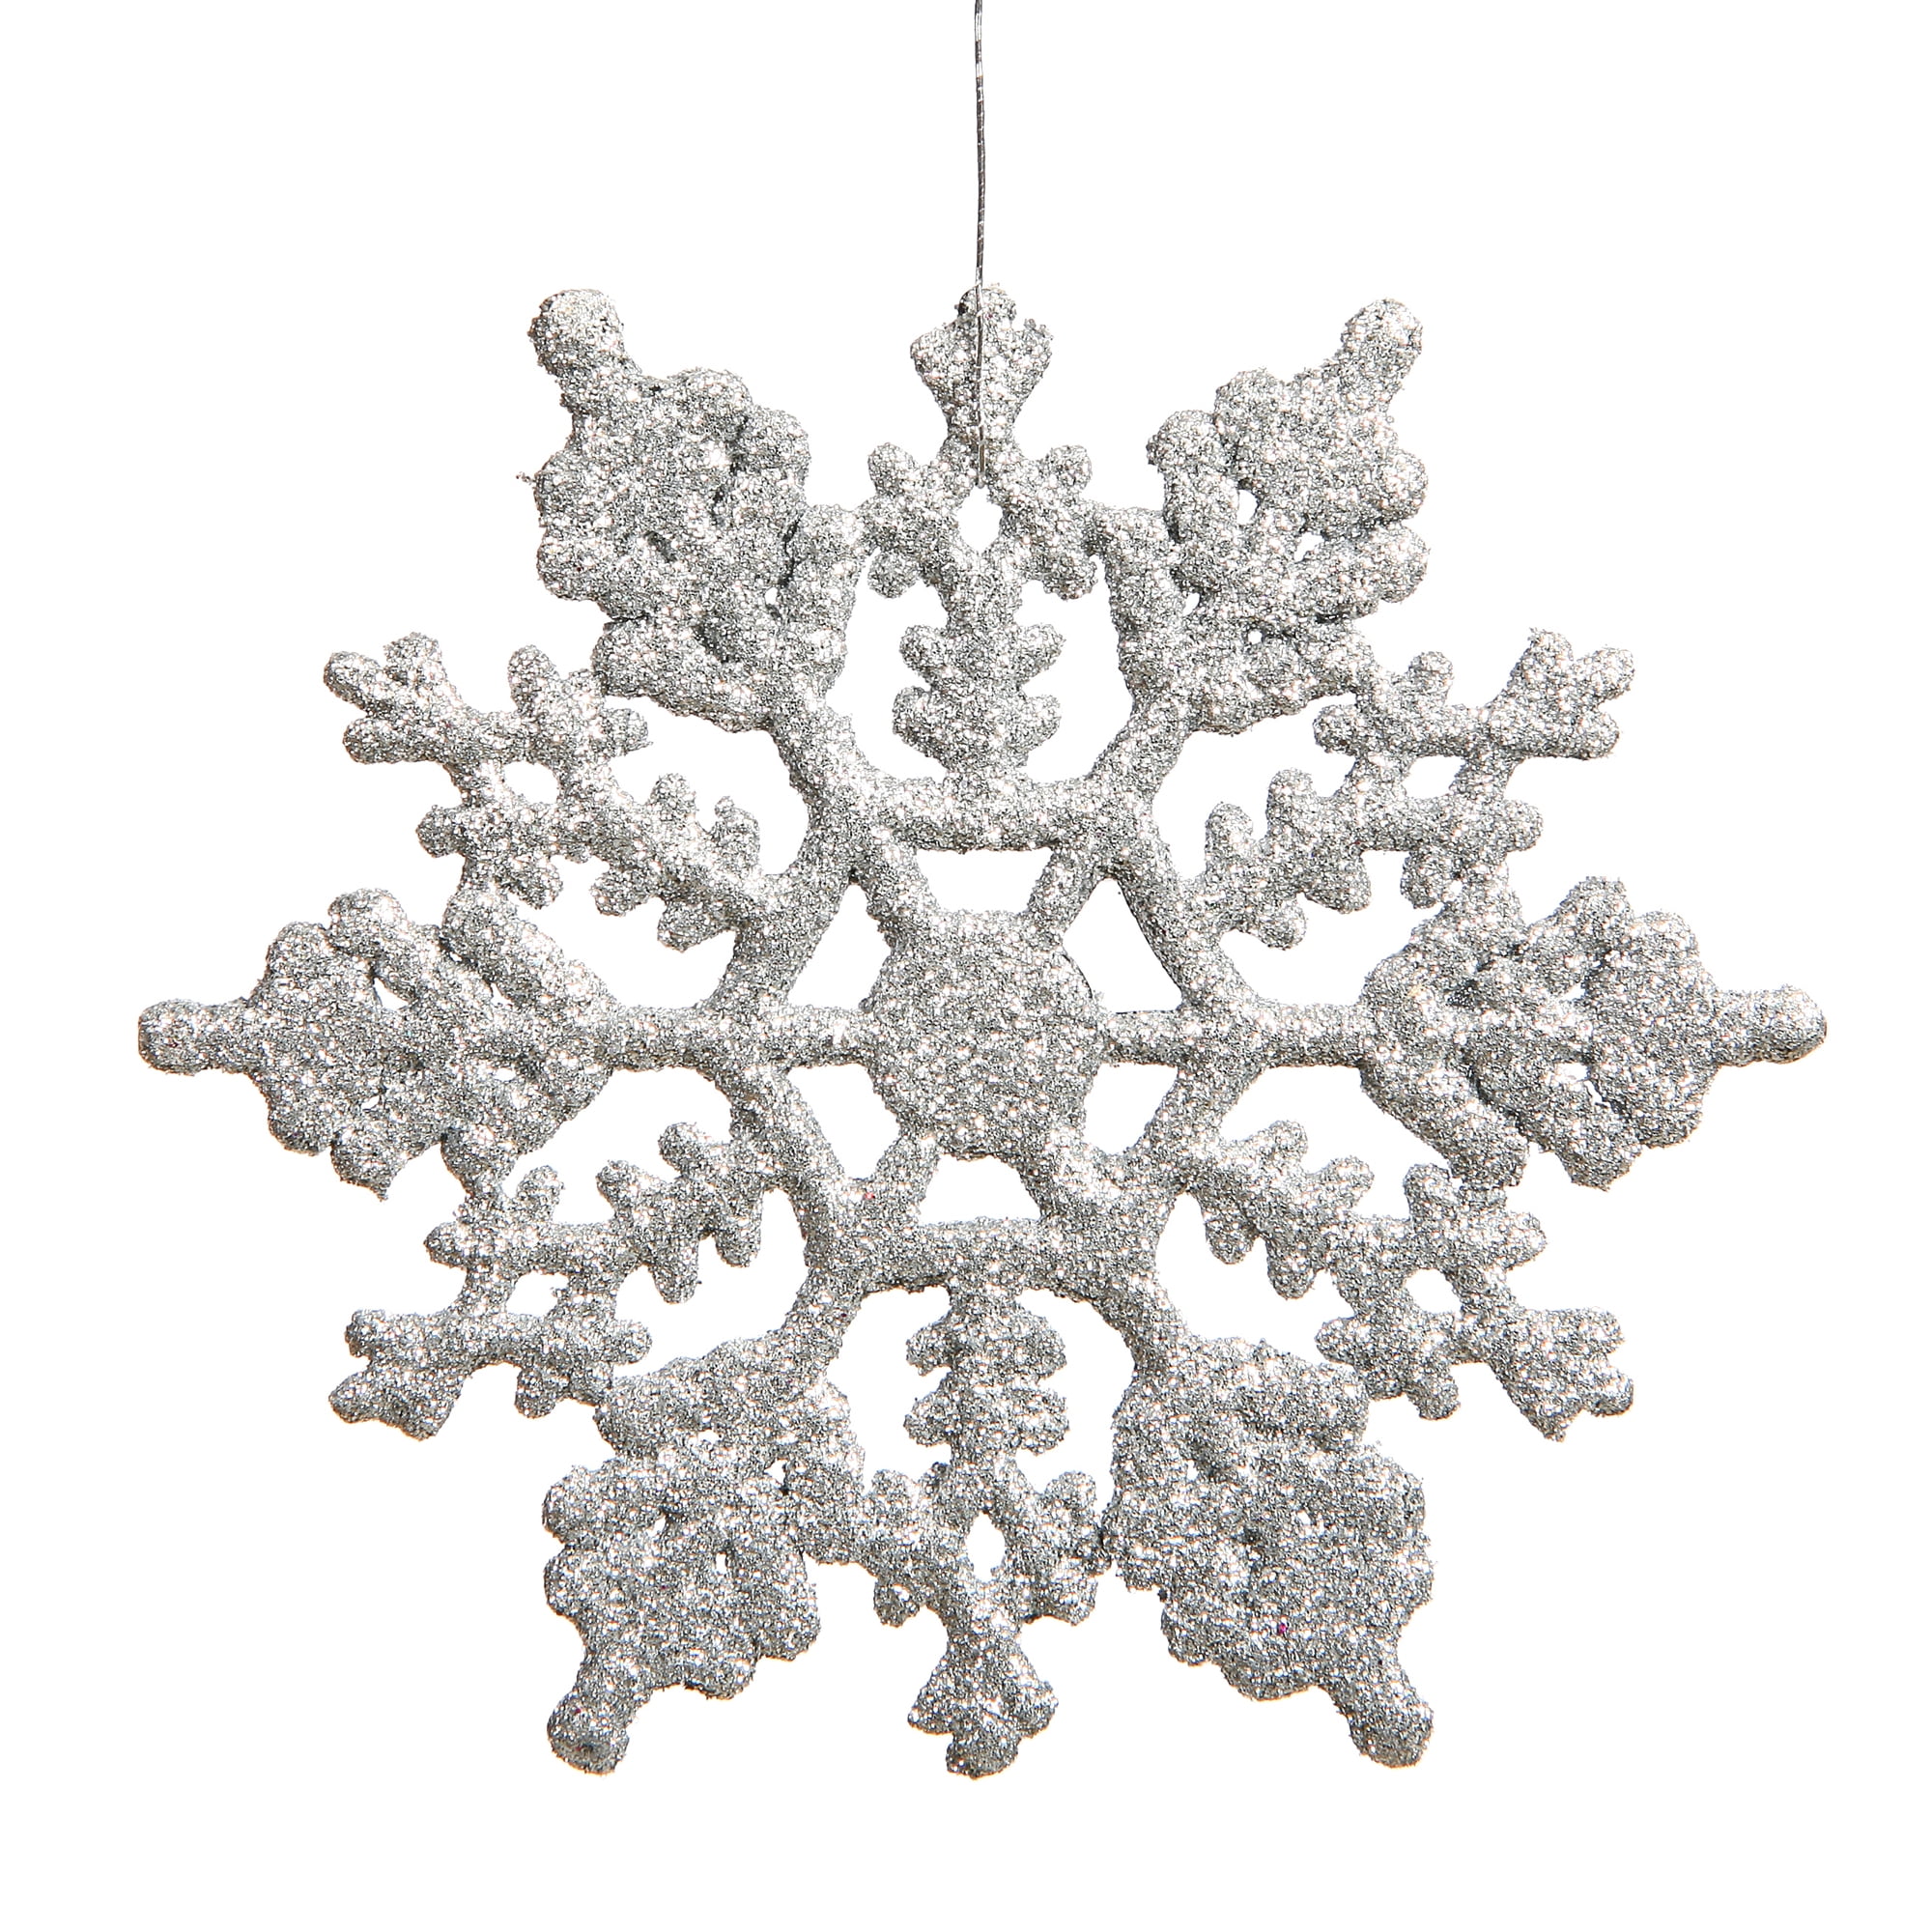 Winter Wonder Lane Silver Glitter Snowflakes Mini Ornaments, 9-Pack